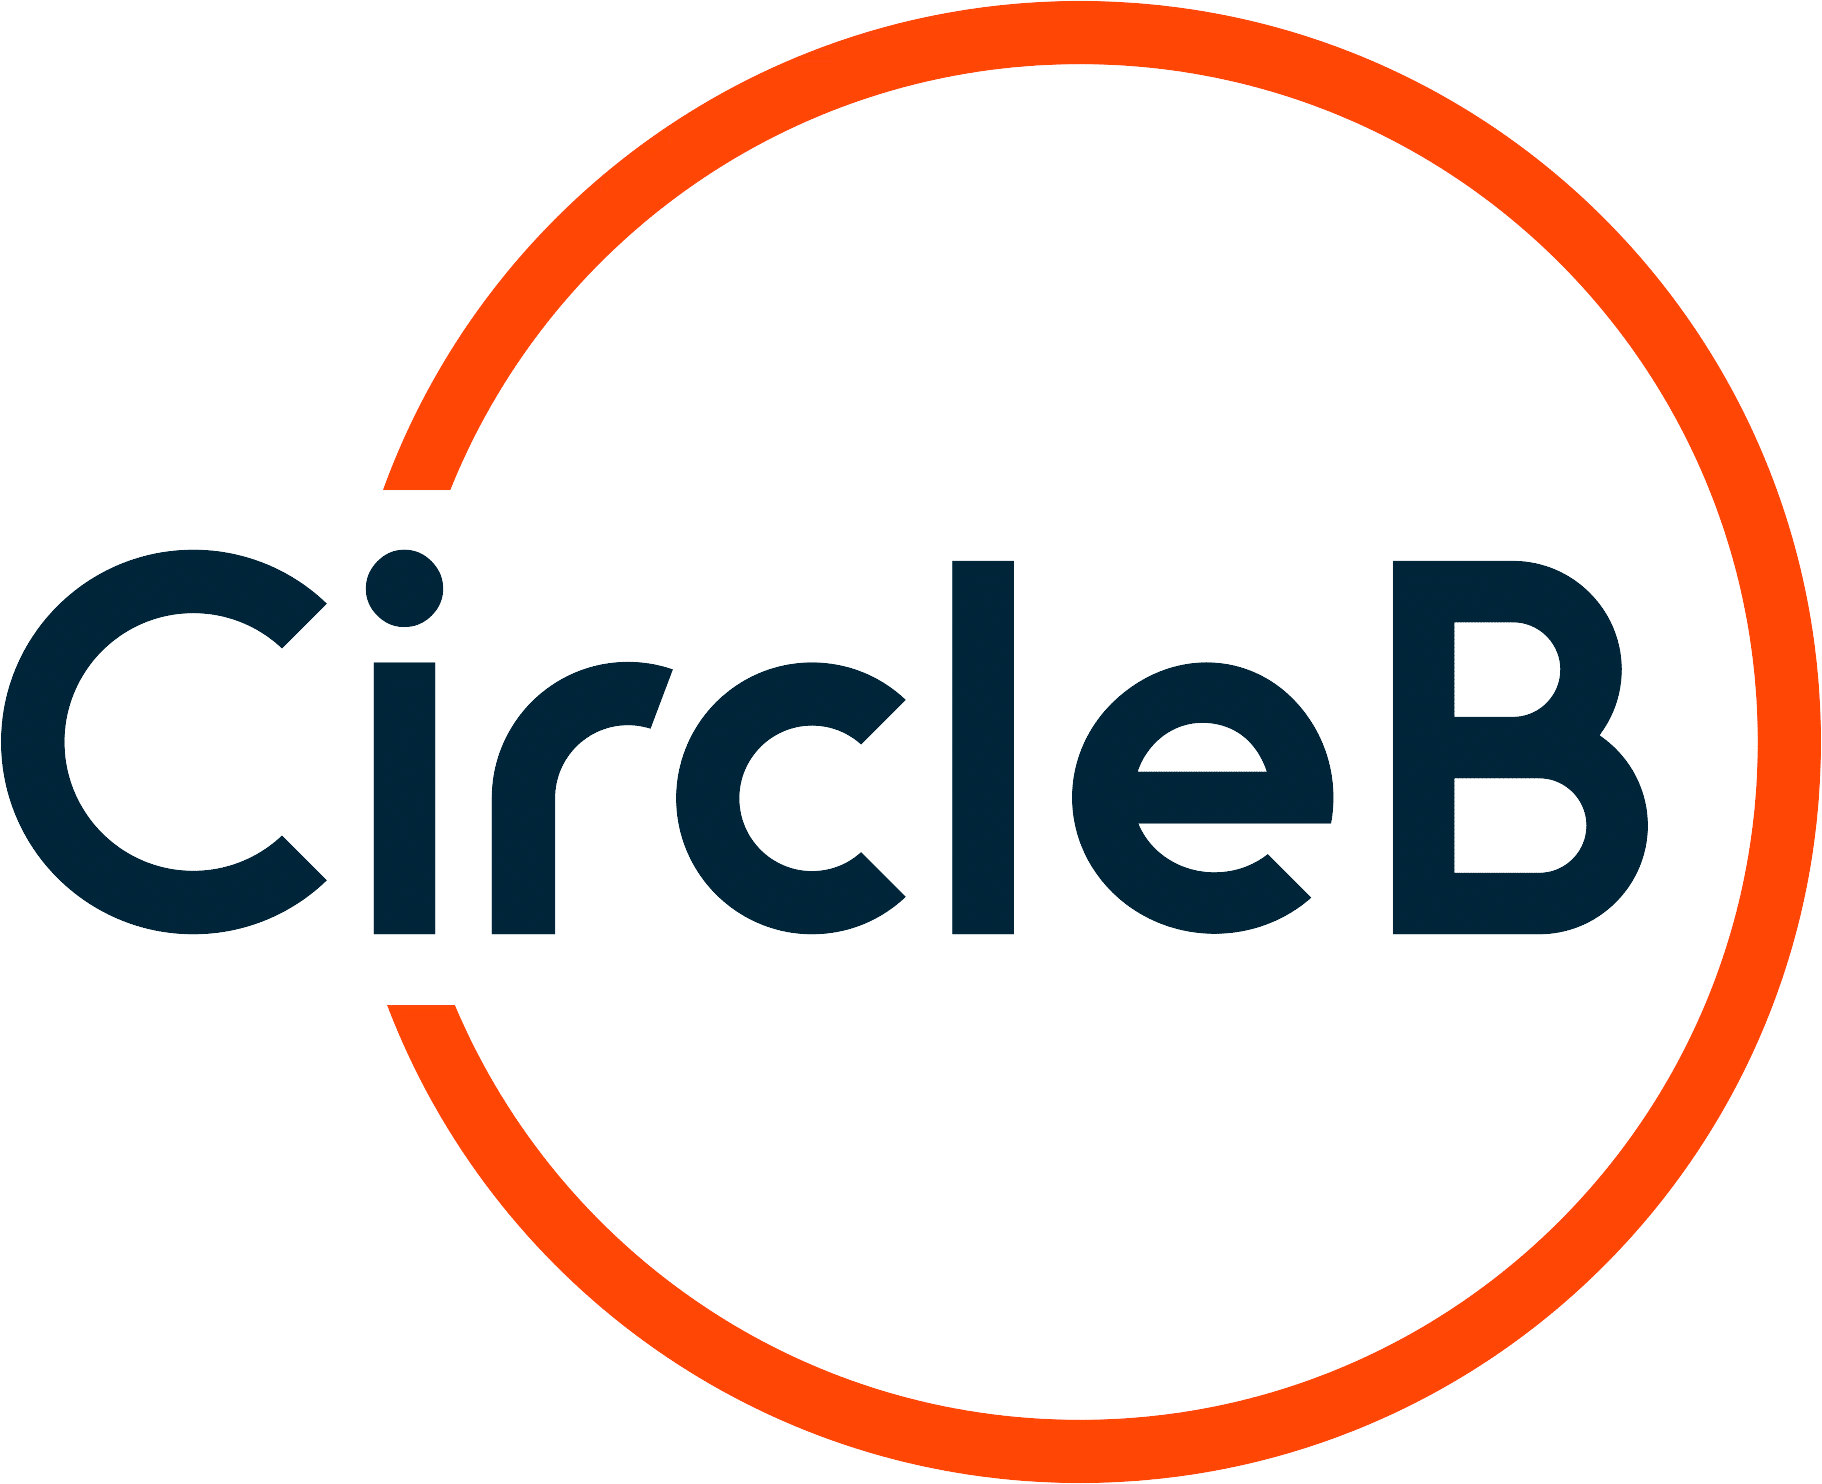 Circle B